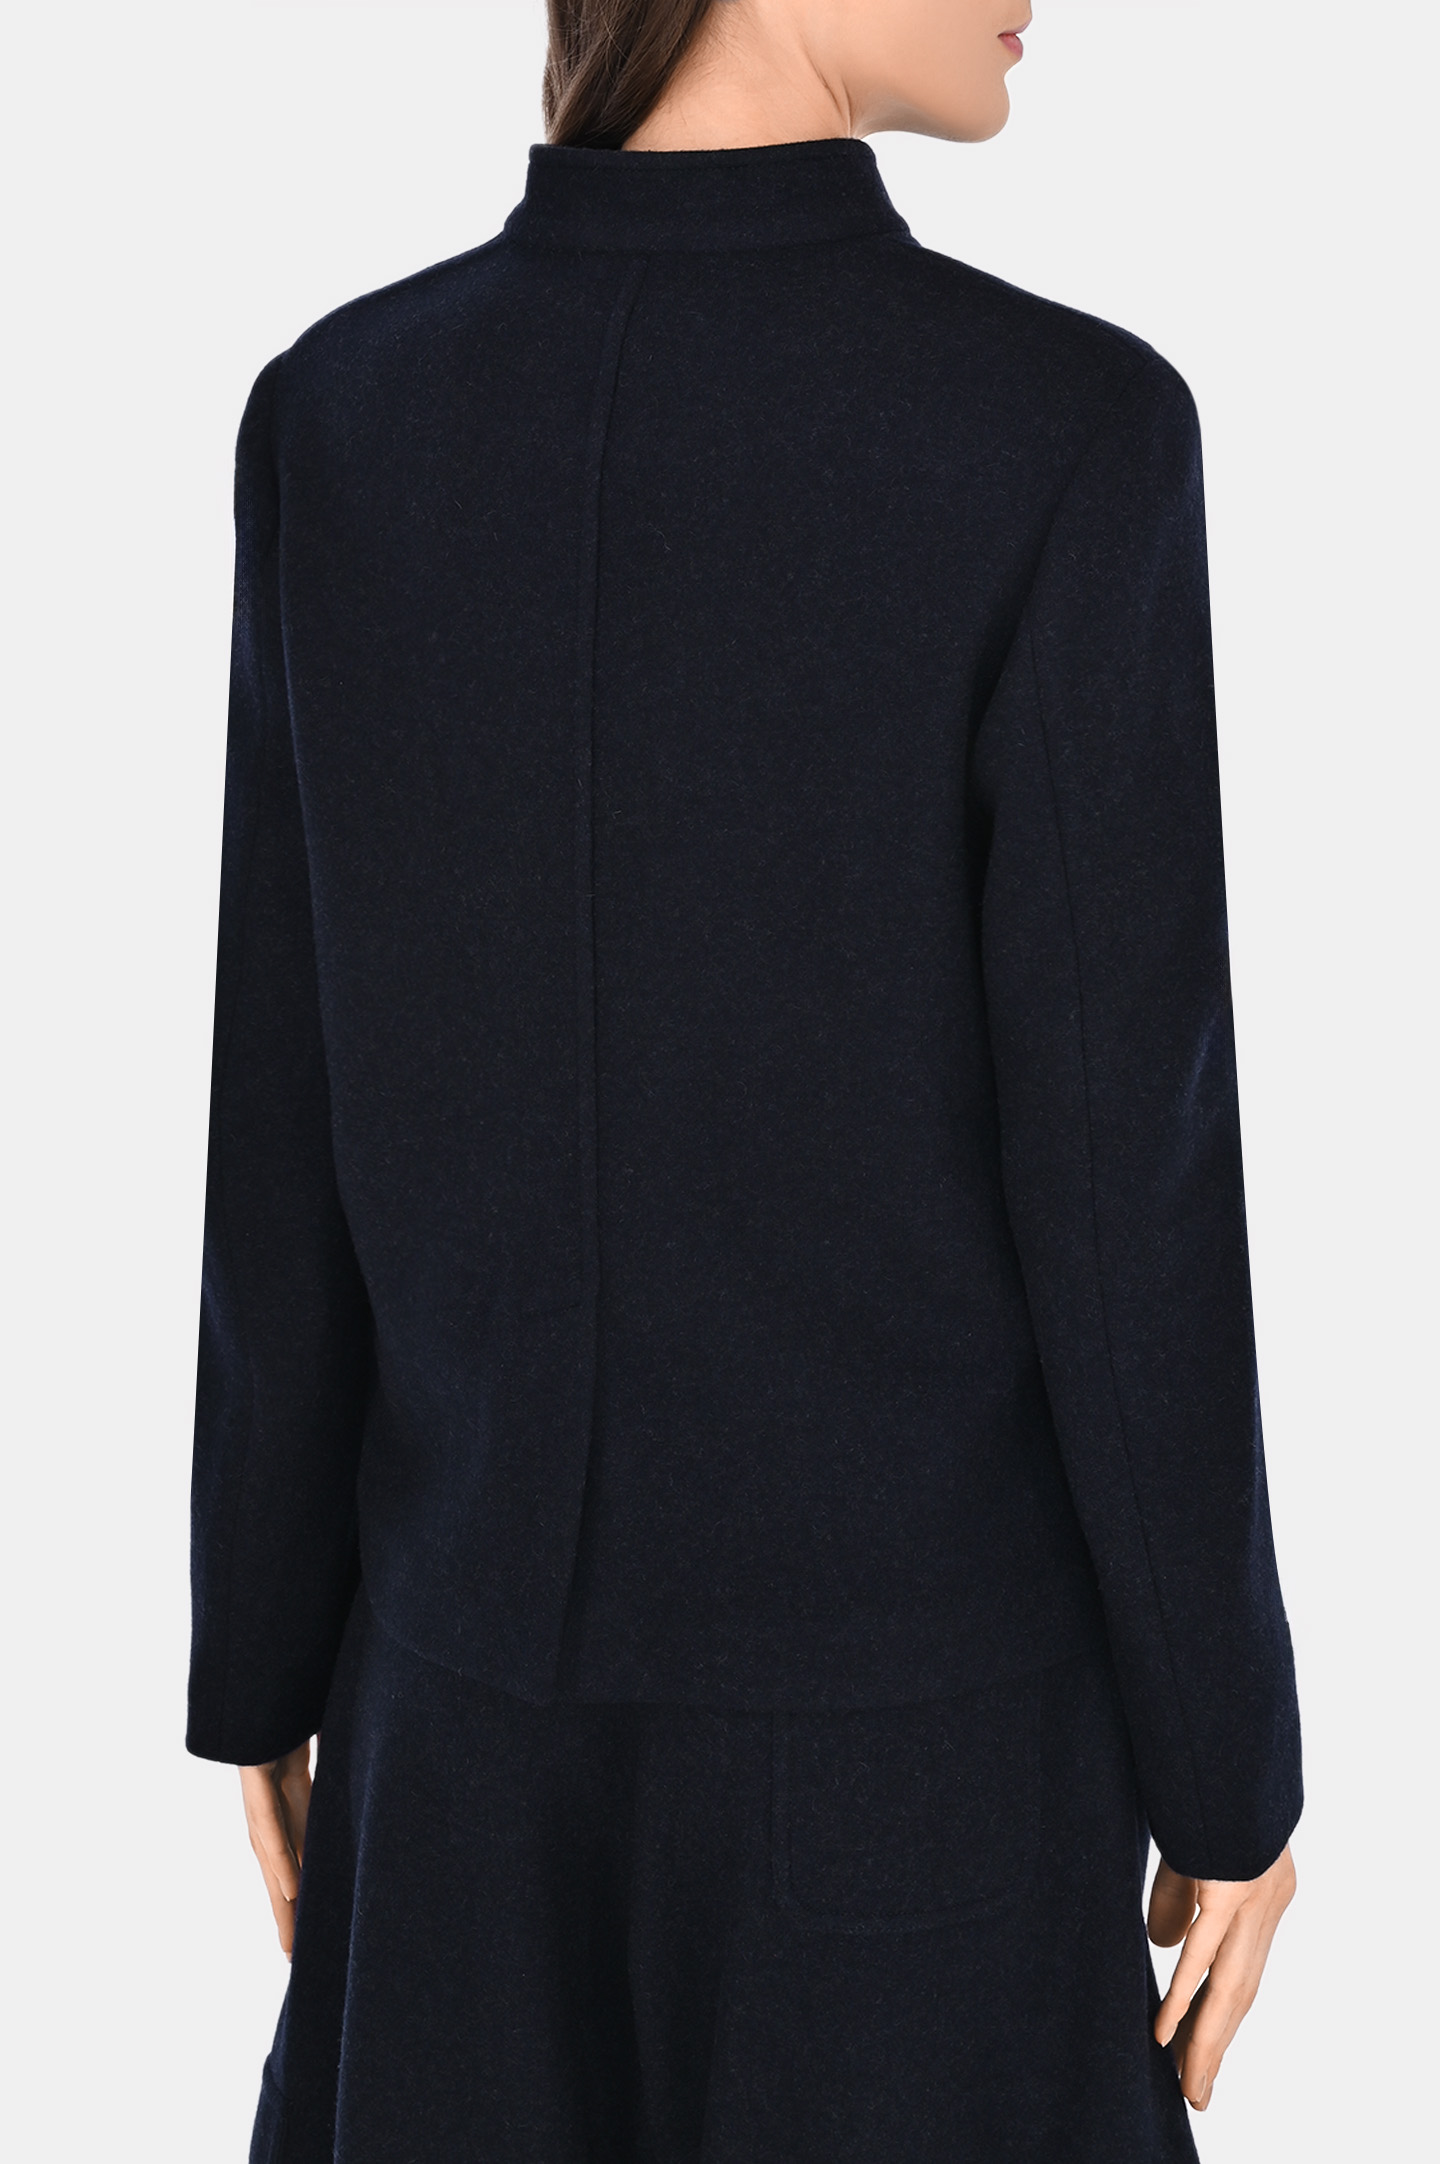 Жакет из кашемира с карманами LORO PIANA FAN9004, цвет: Темно-синий, Женский